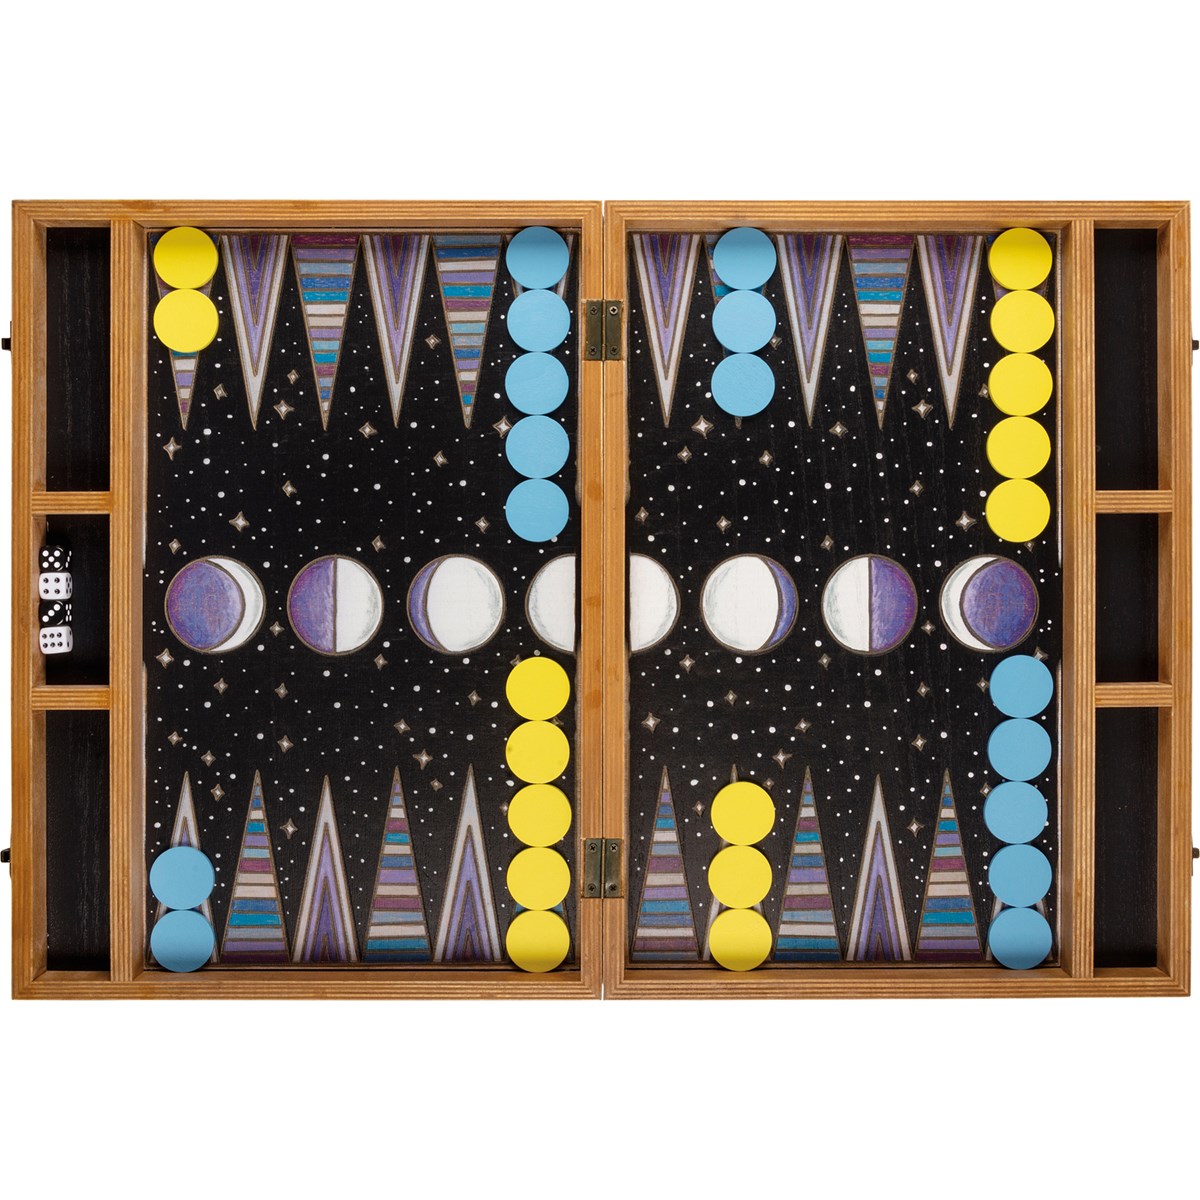 Tabletop Game - Backgammon - Open: 27.25" x 18.50" x 1.25", Closed: 13.50" x 18.50" x 2.50" - Wood, Metal, Plastic